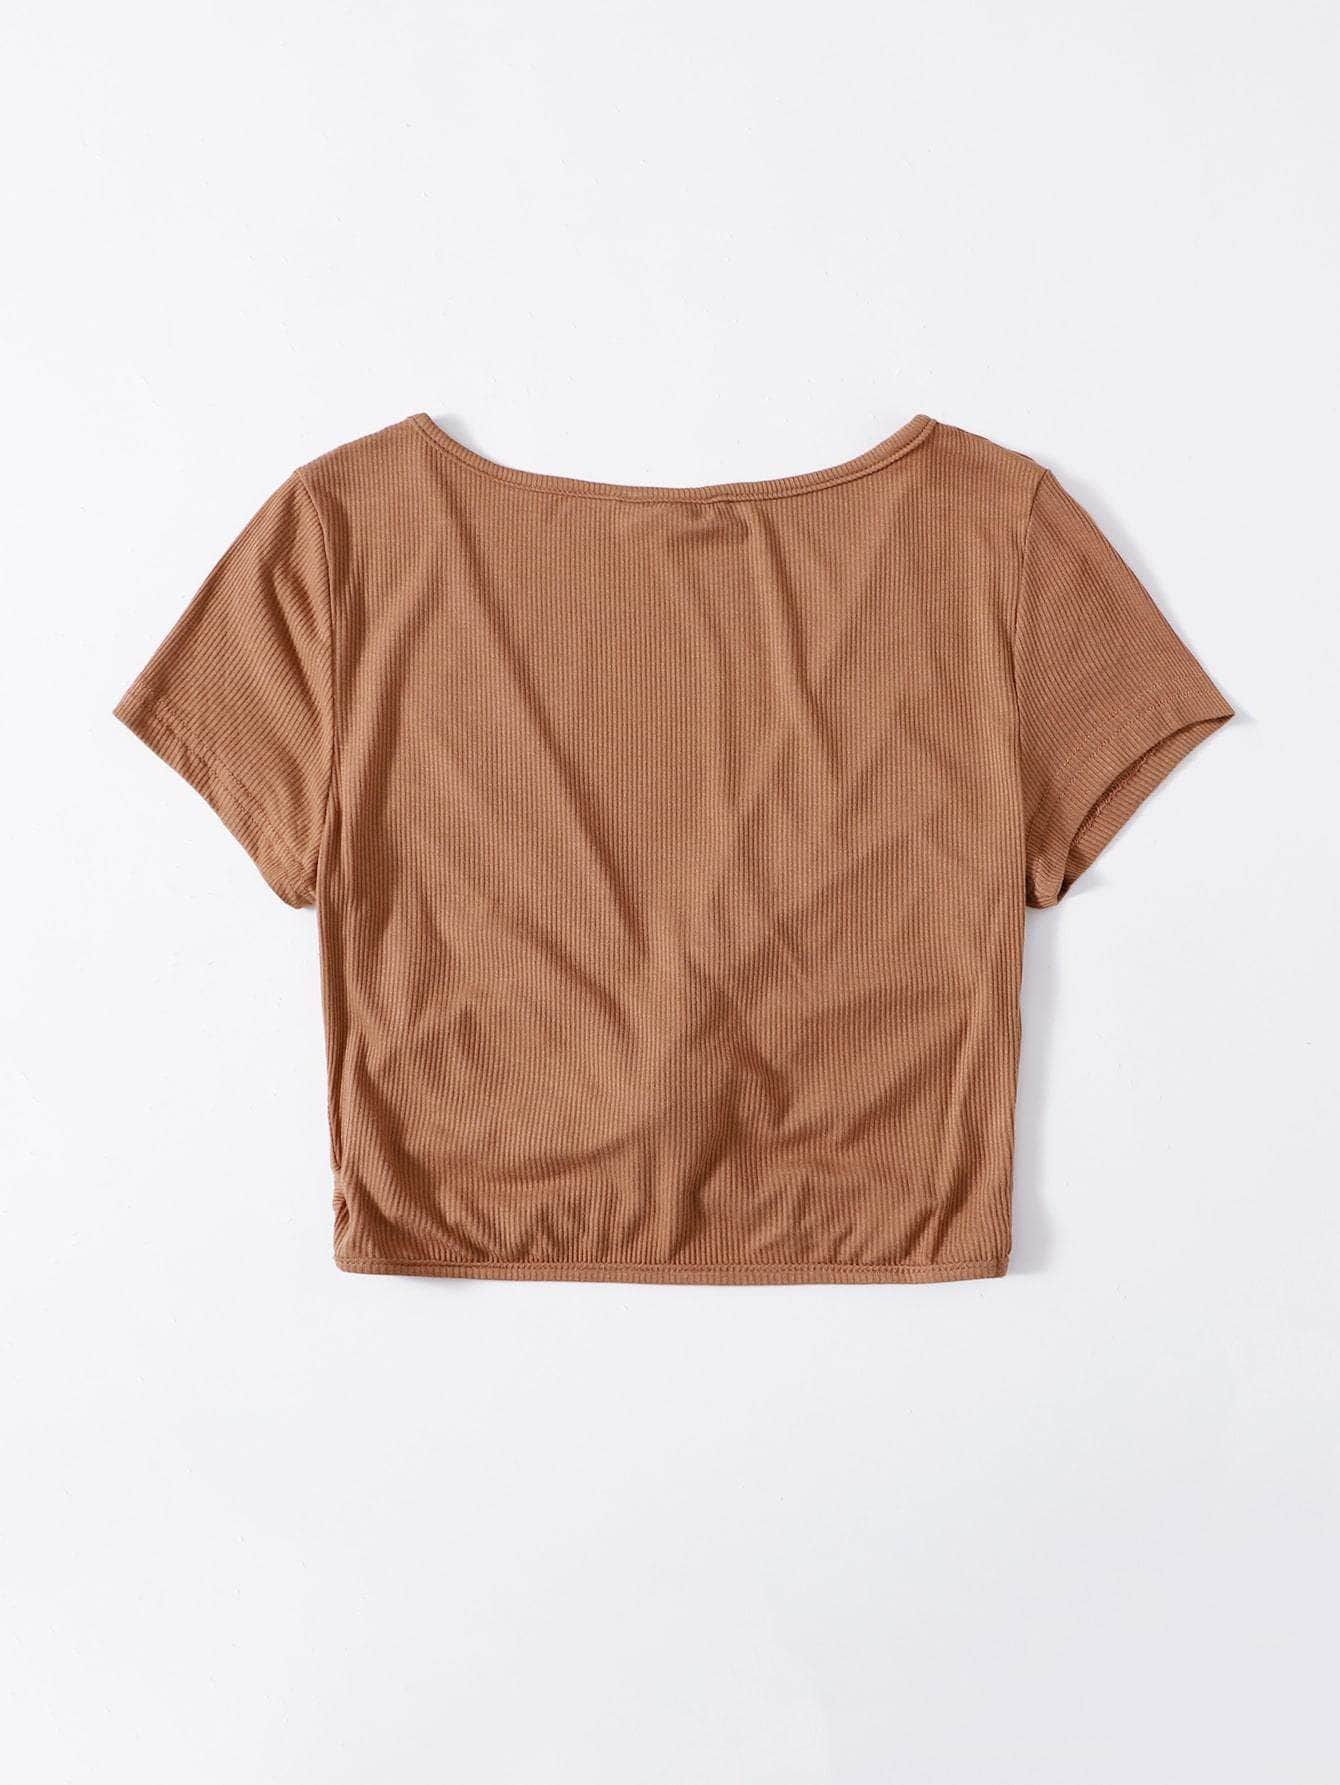 Oxido marron / S Camiseta girante delantero de cuello profundo